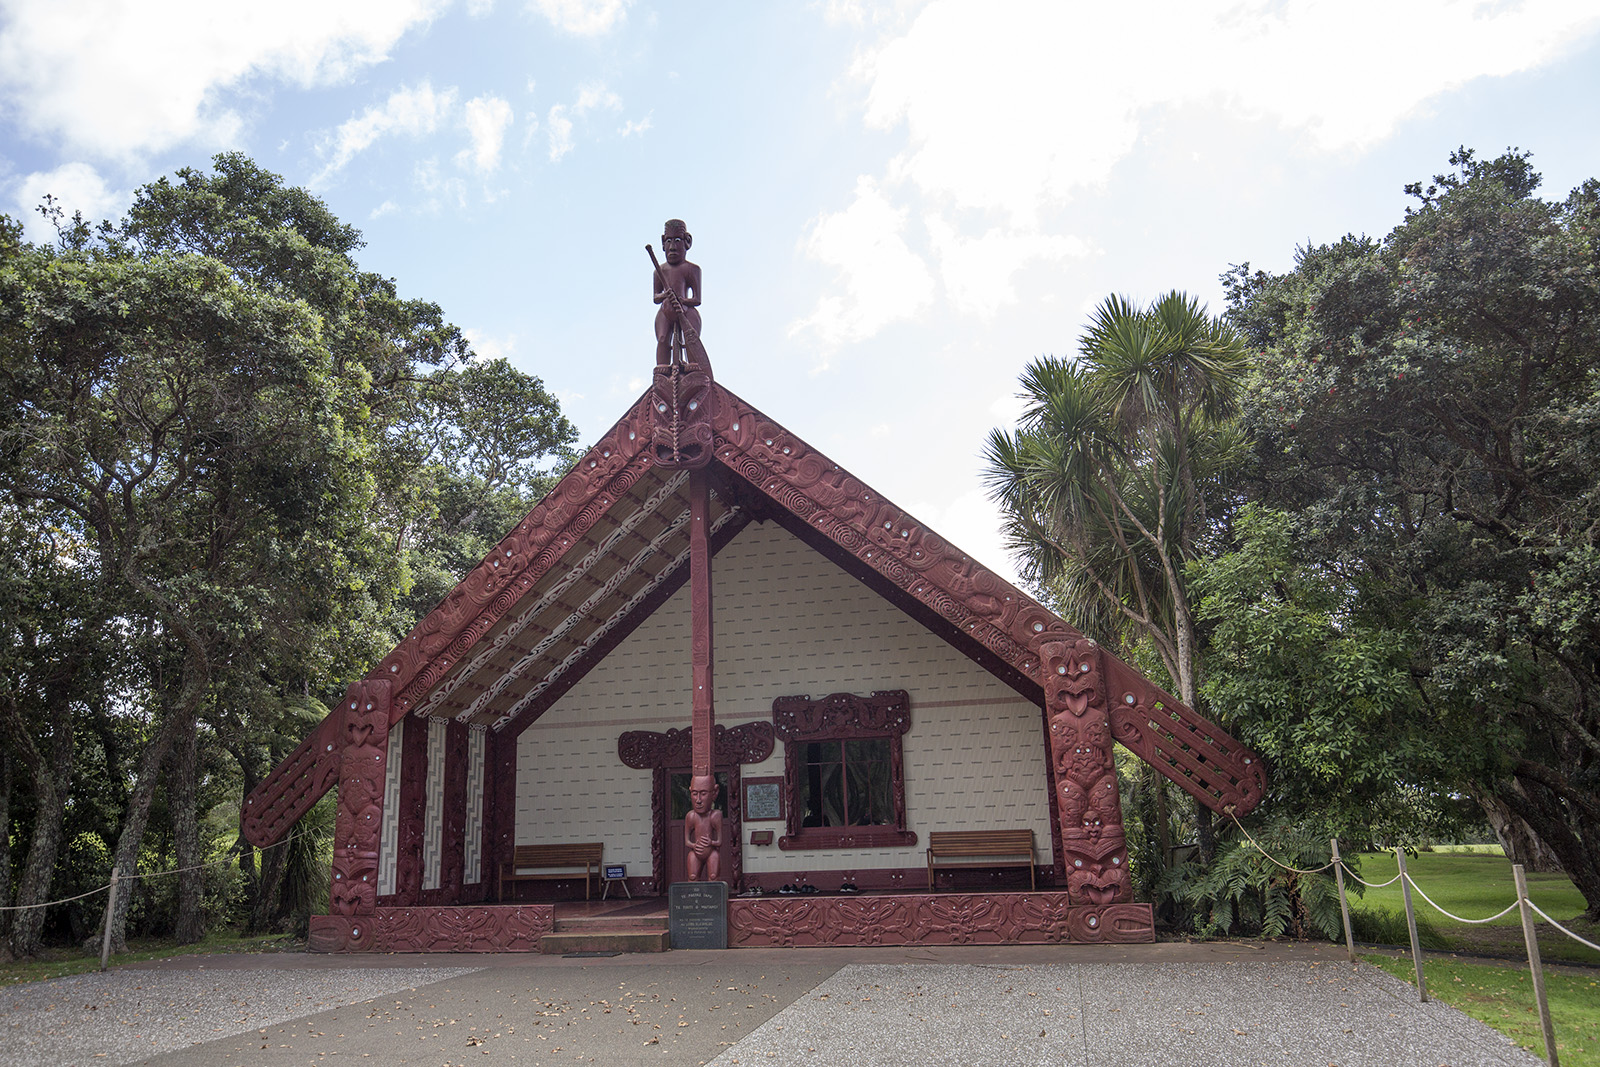 Waitangi